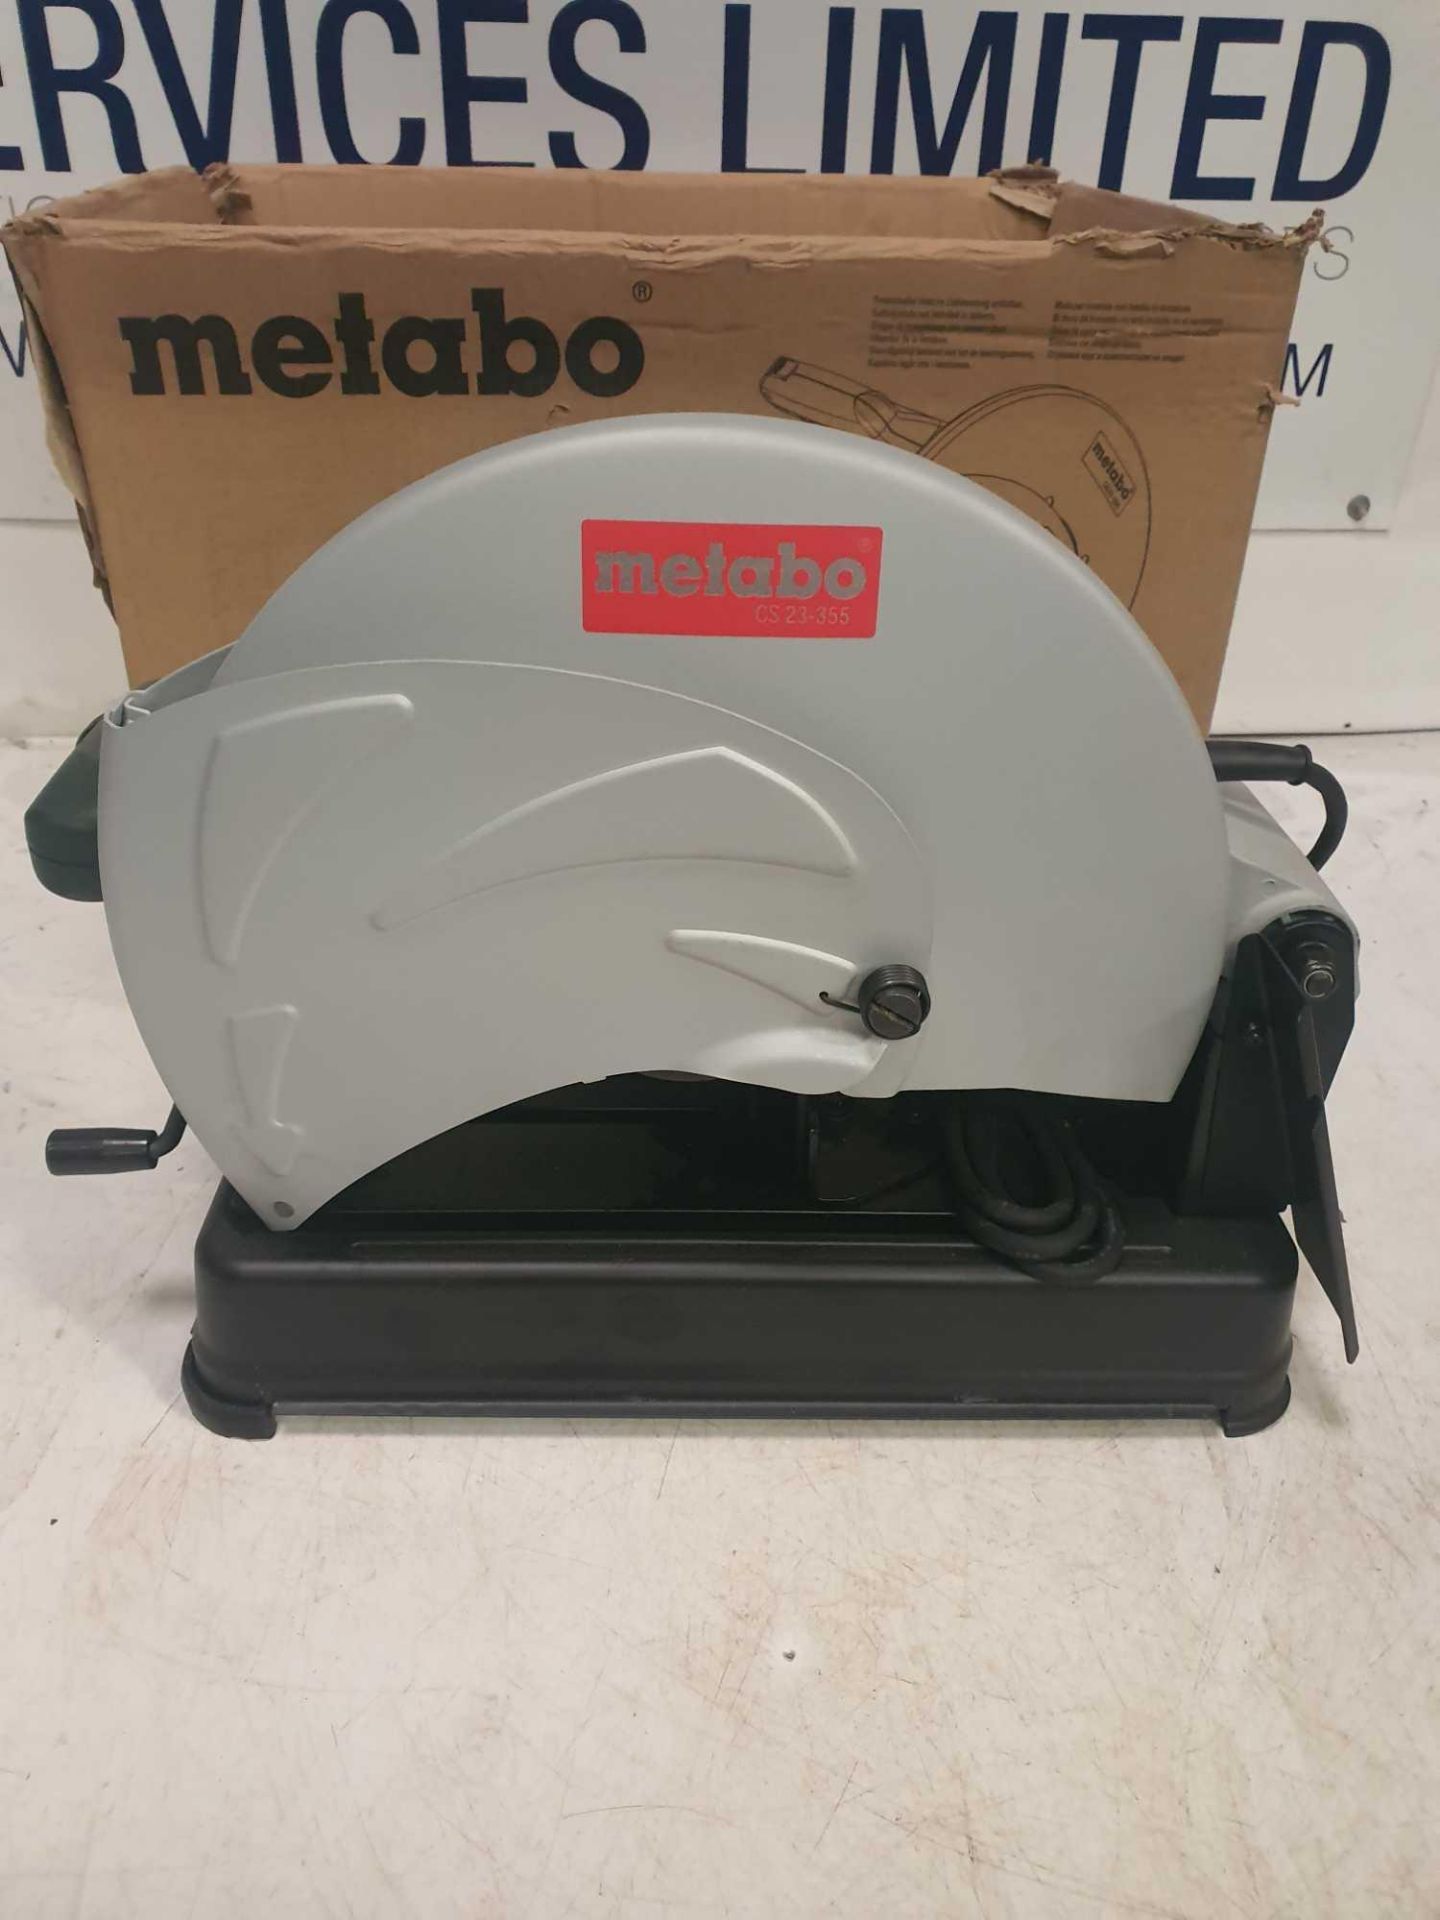 Metabo 110v metal chop saw - Image 2 of 4